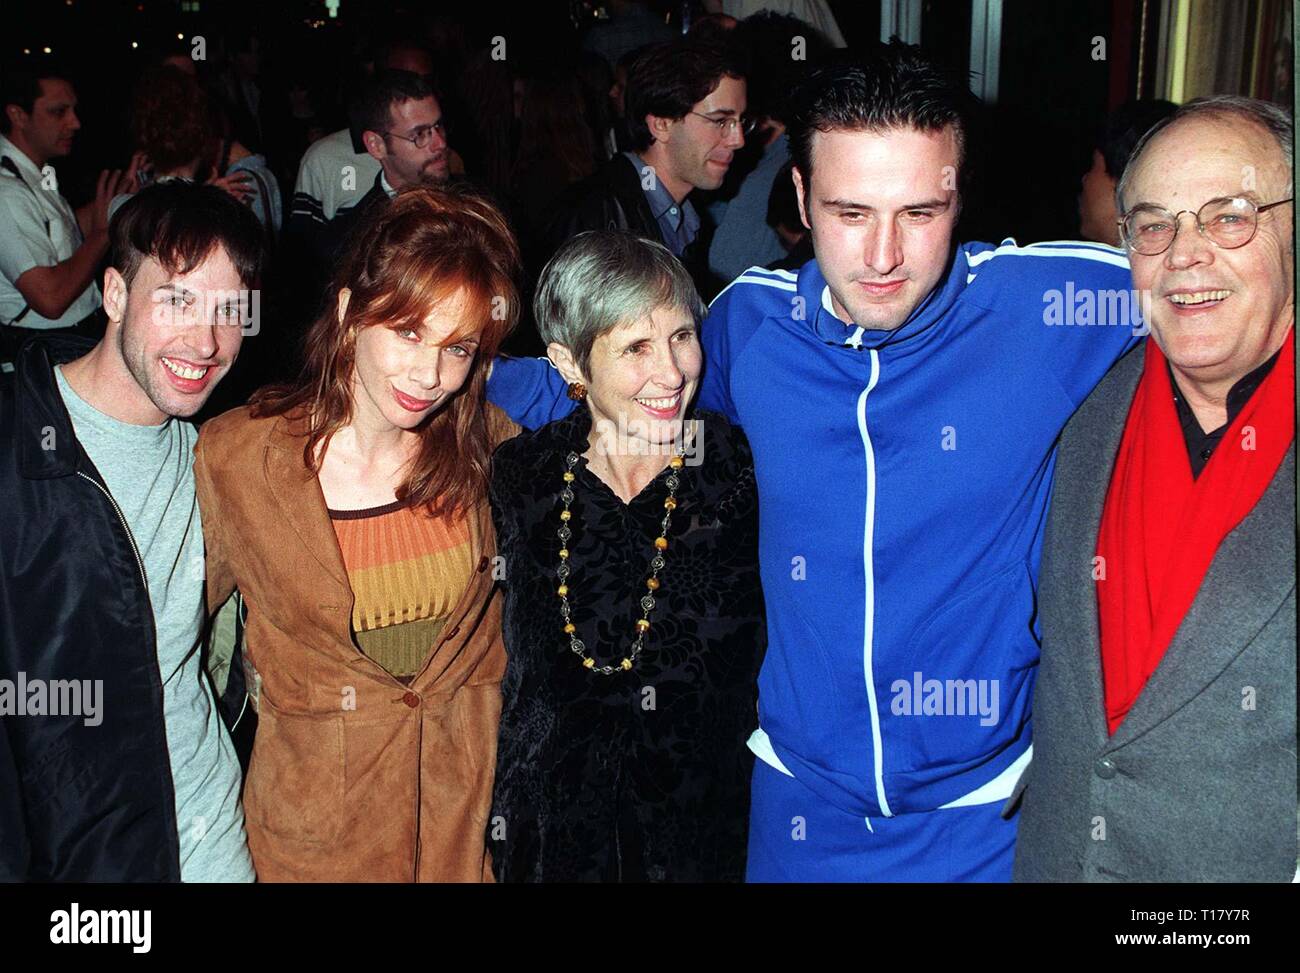 LOS ANGELES, CA. February 02, 1997: Arquette family: (LtoR) Alexis Arquette, Rosanna Arquette, Marti (mother), David Arquette & Lewis Arquette (father) at premiere of David's new movie, 'johns.' Stock Photo